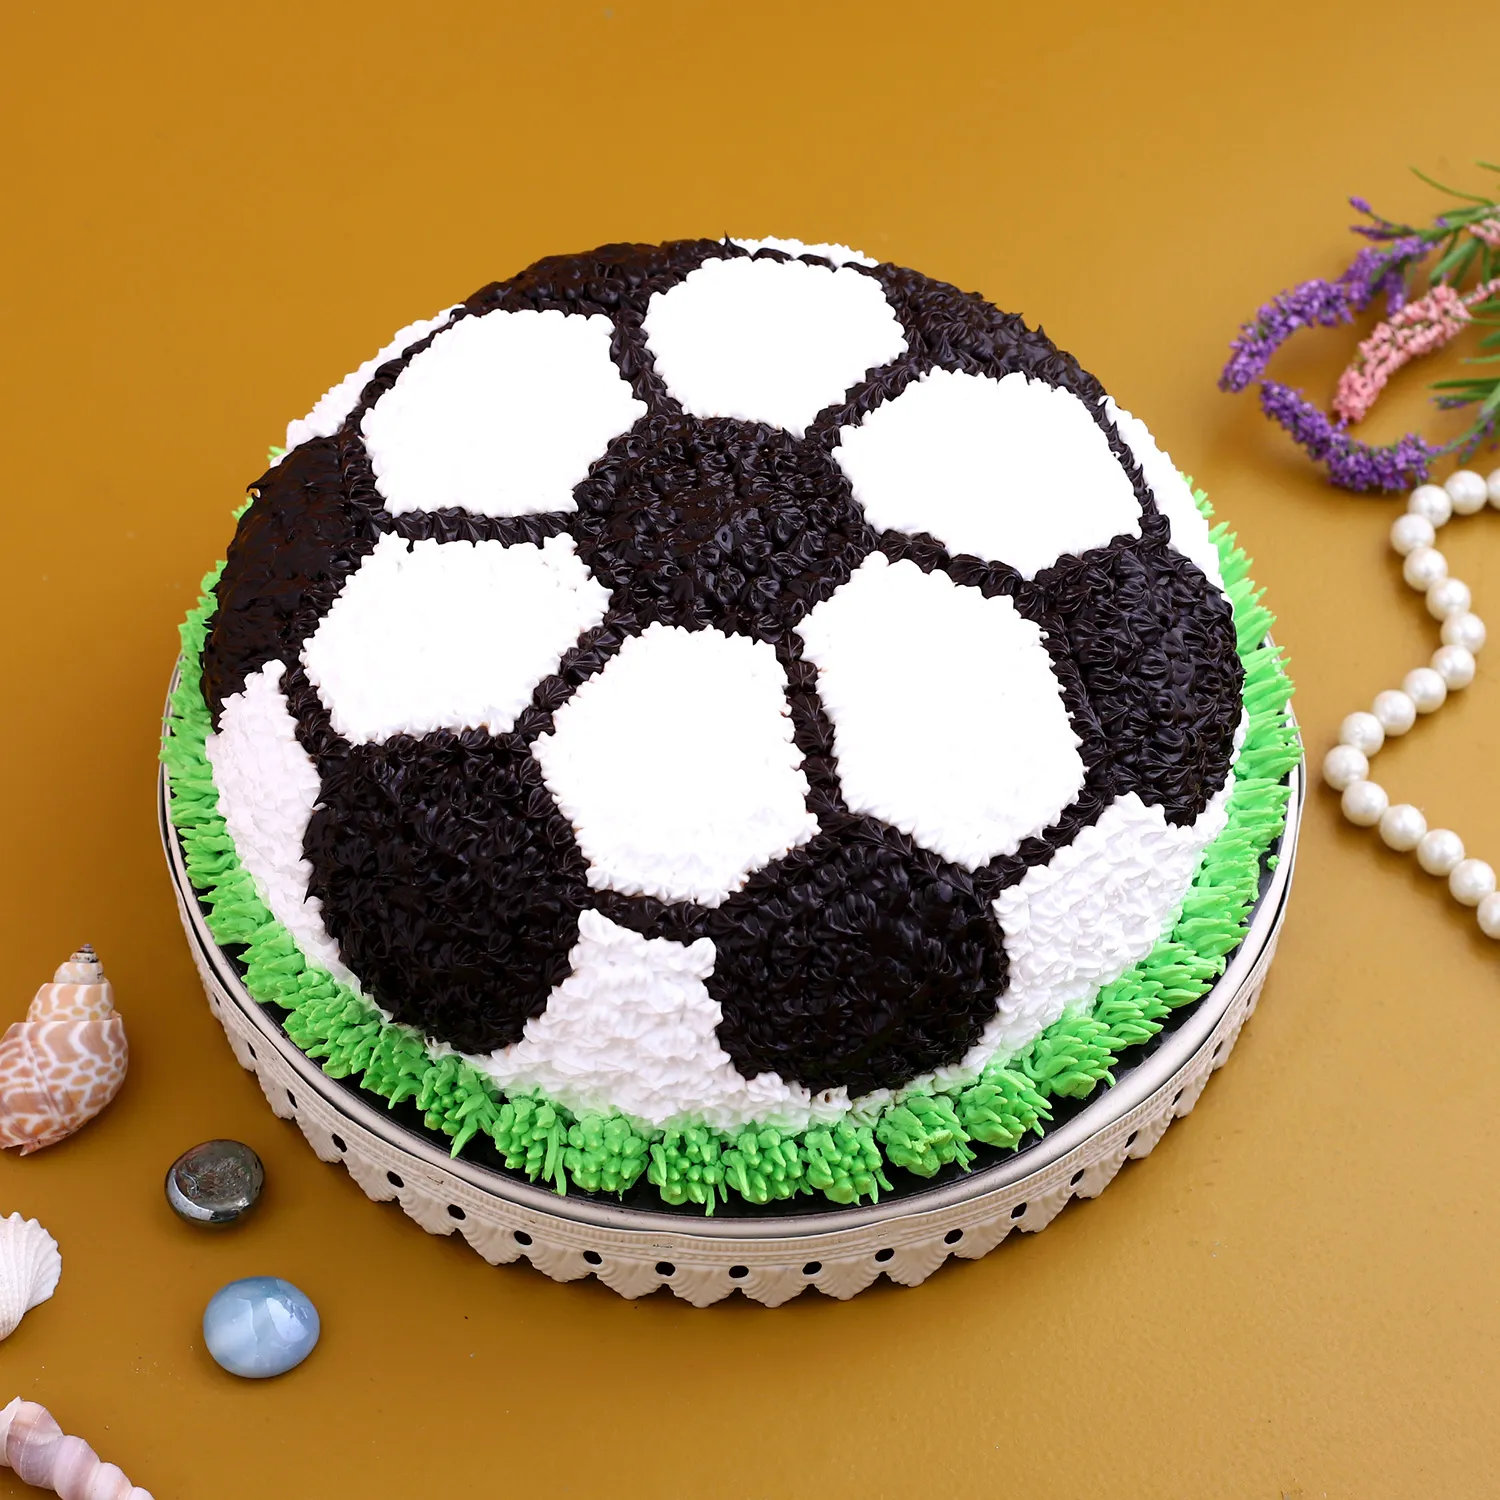 Football Theme Chocolate Cake - 1 KG